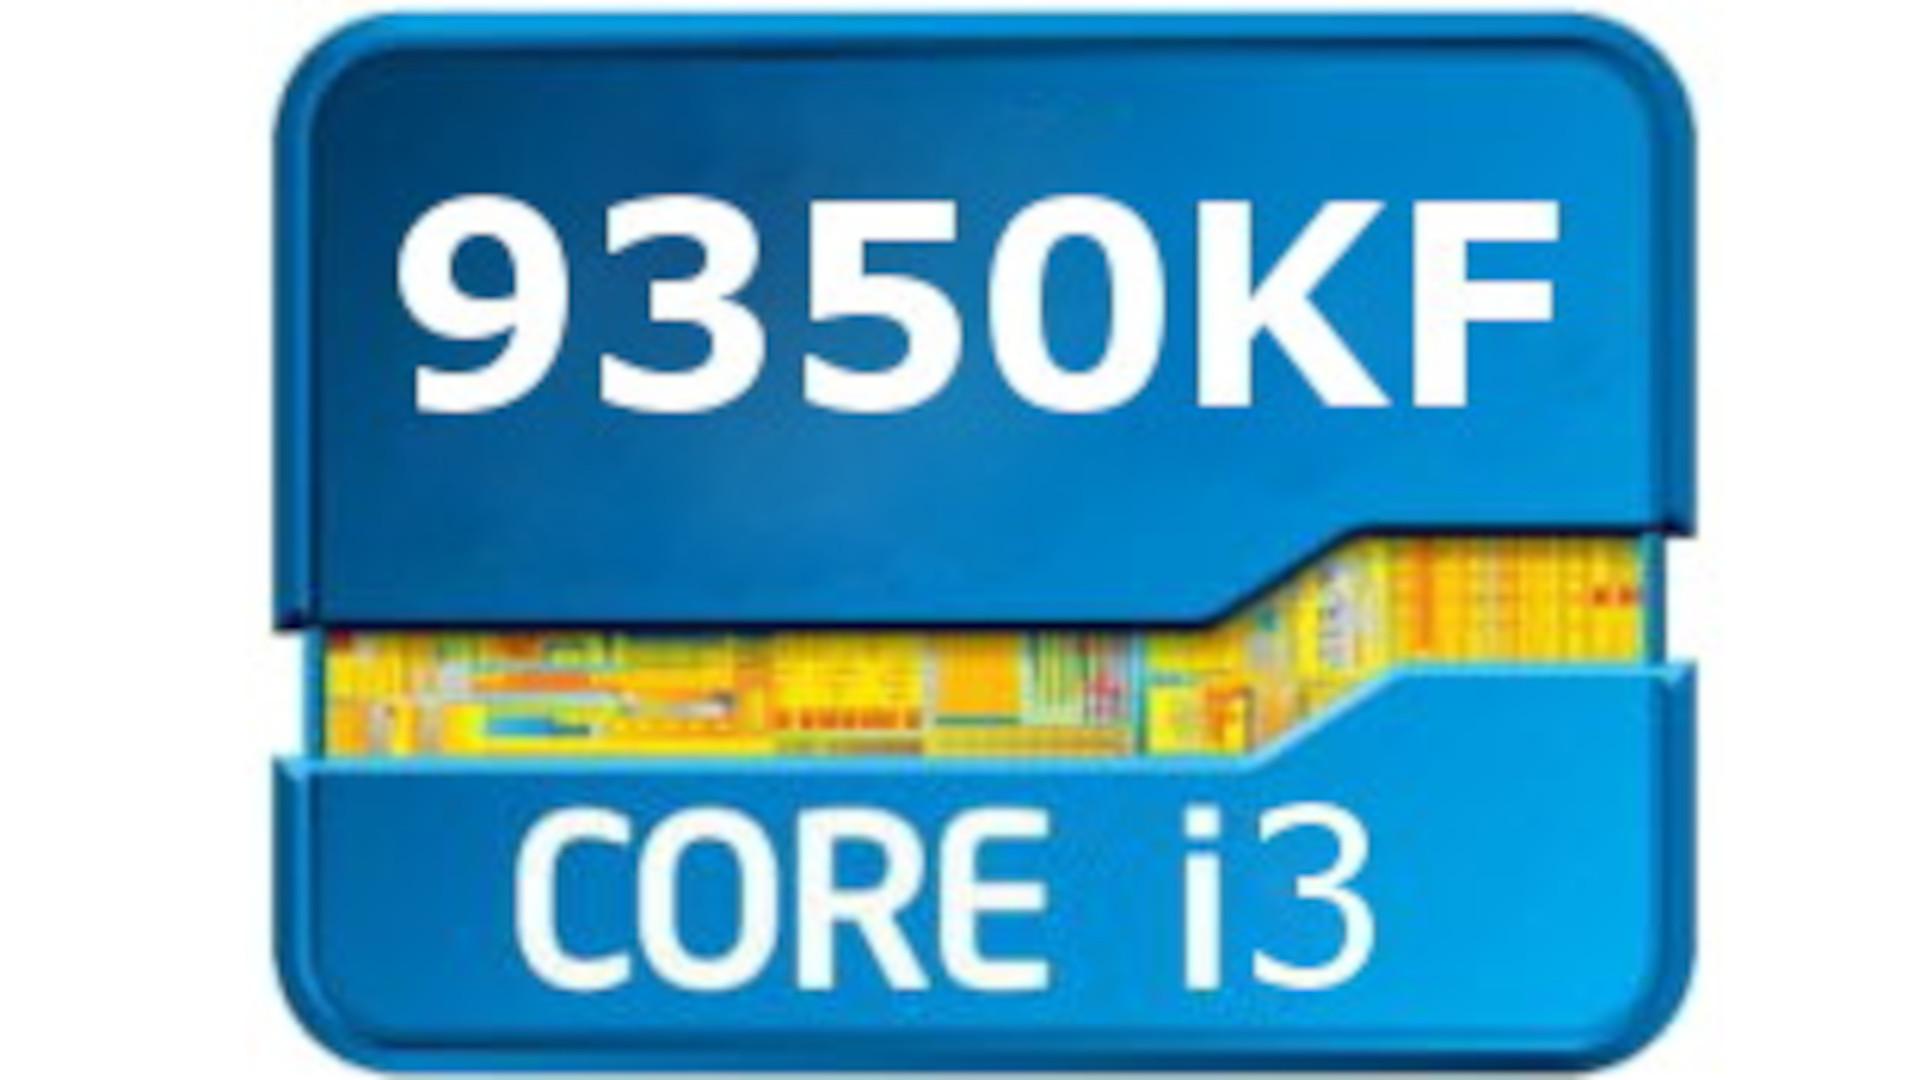 Intel Core i3 9350KF 5